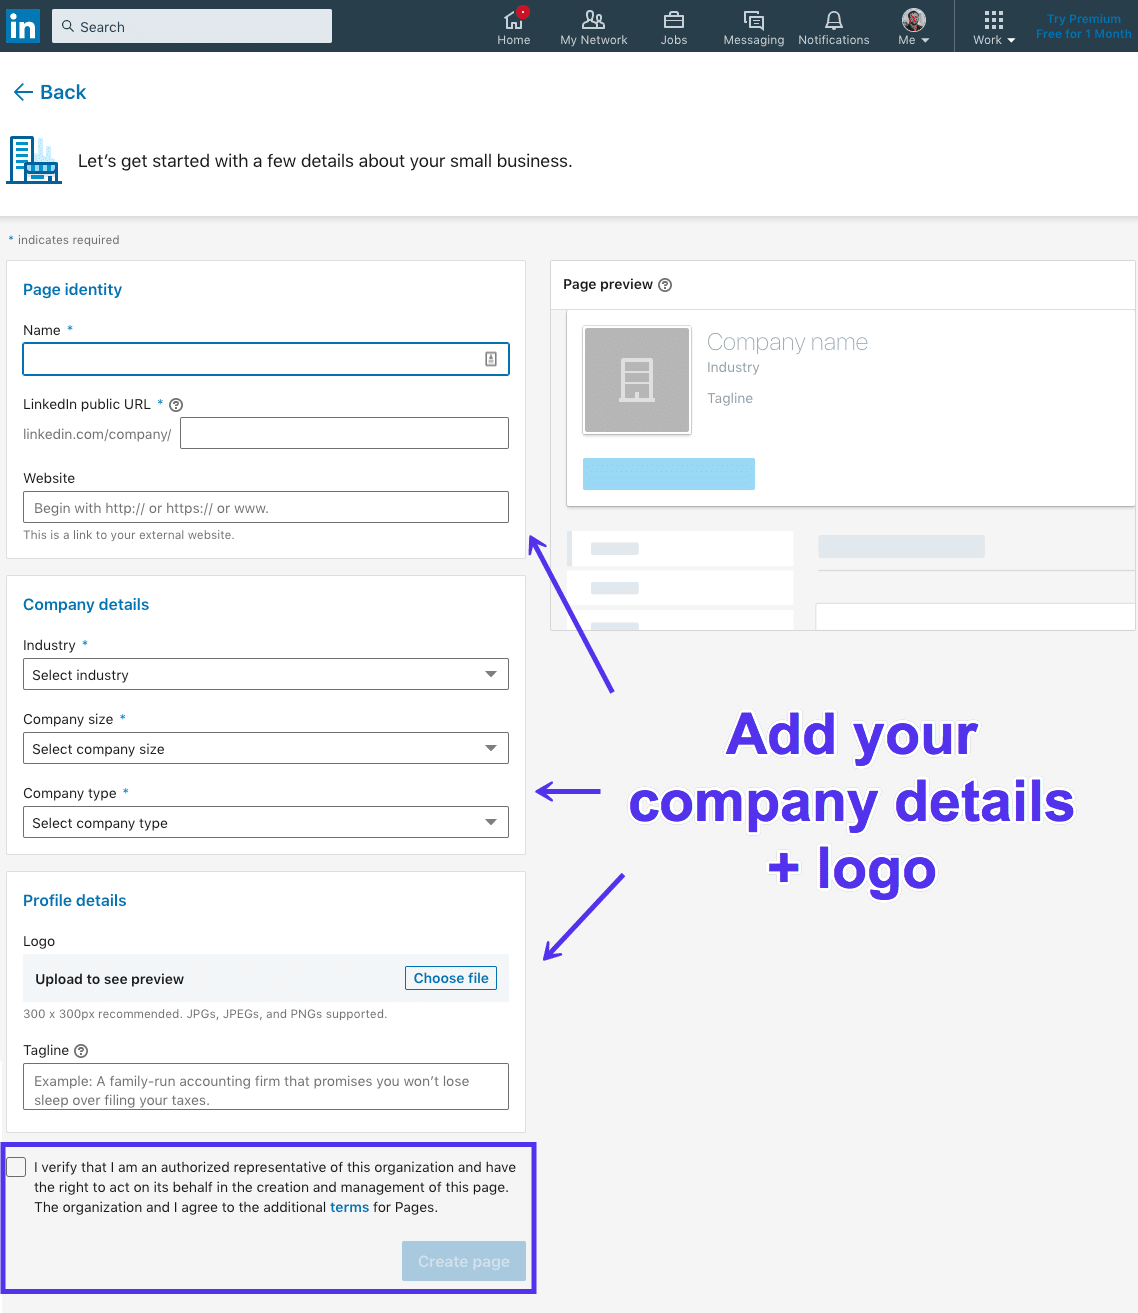 Why can't I create a company profile on LinkedIn?